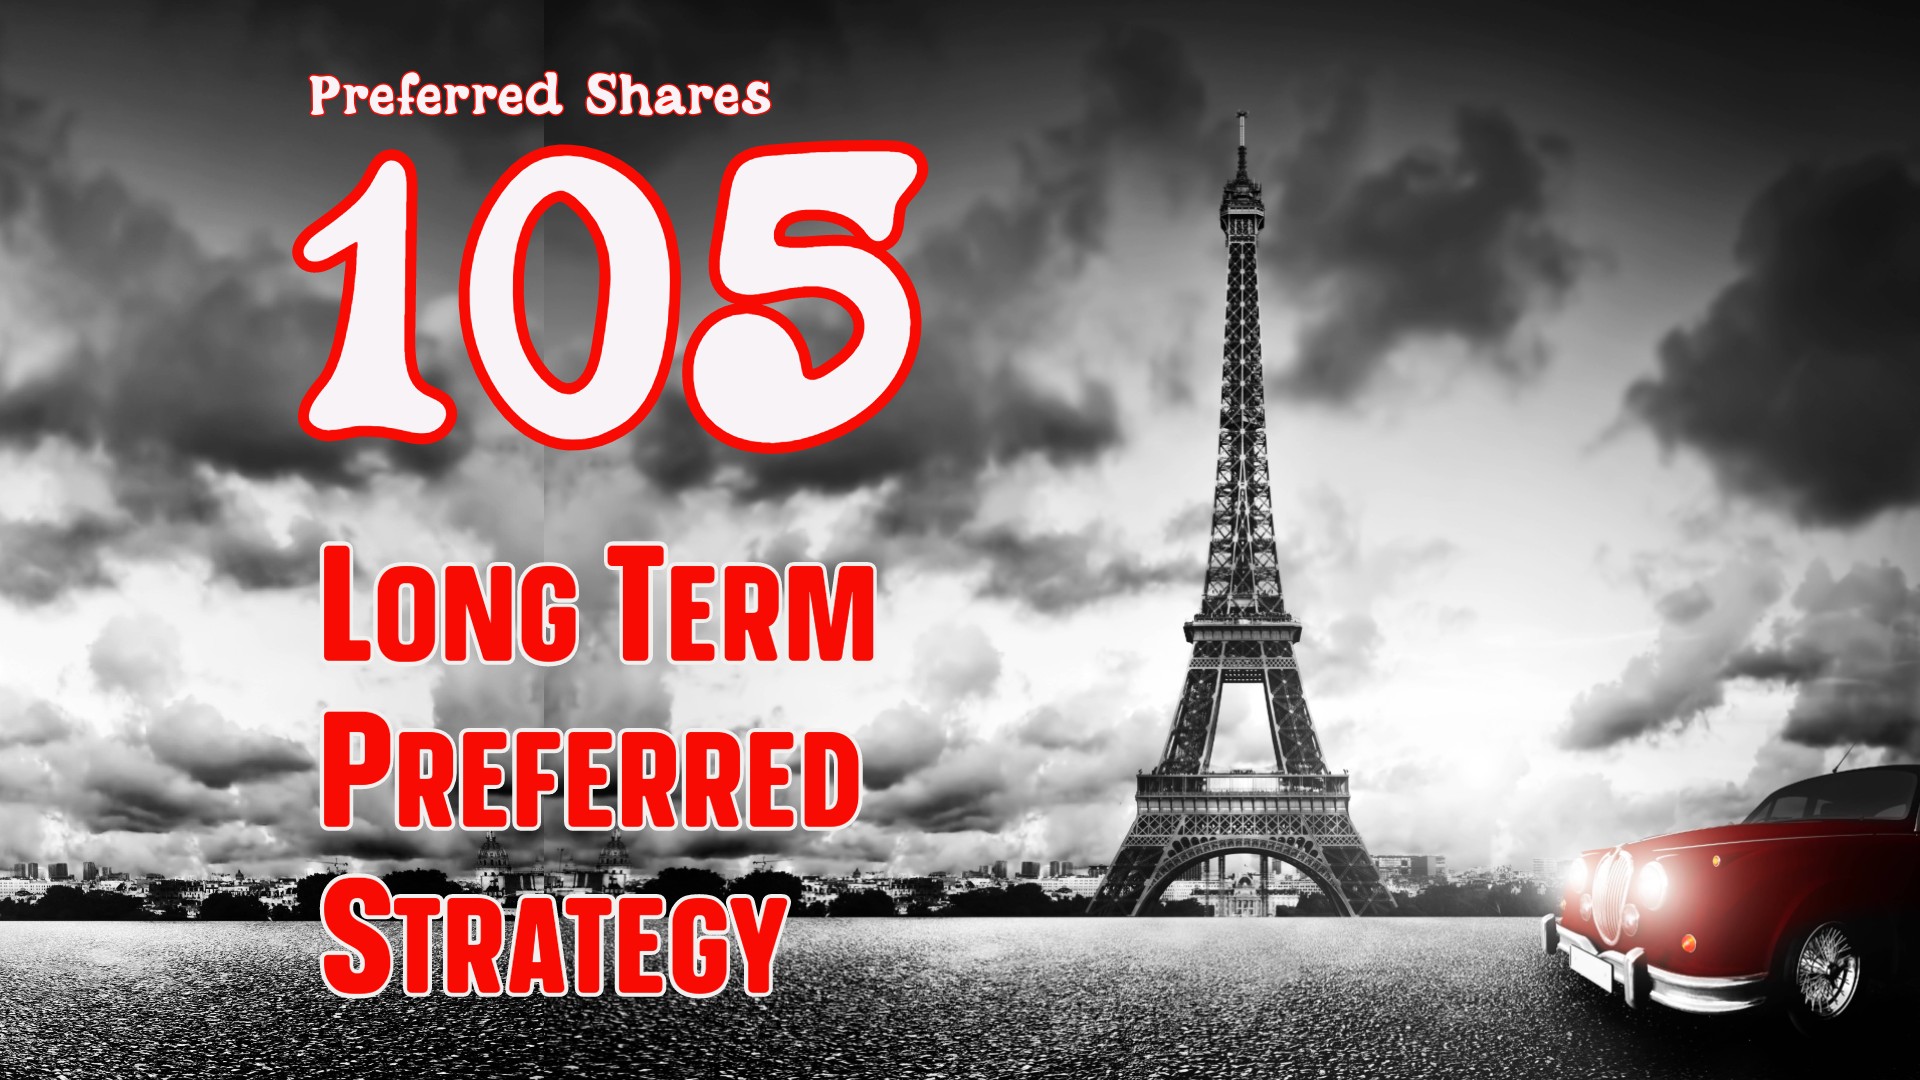 Preferred Shares 105: Long-Term Preferred Strategy